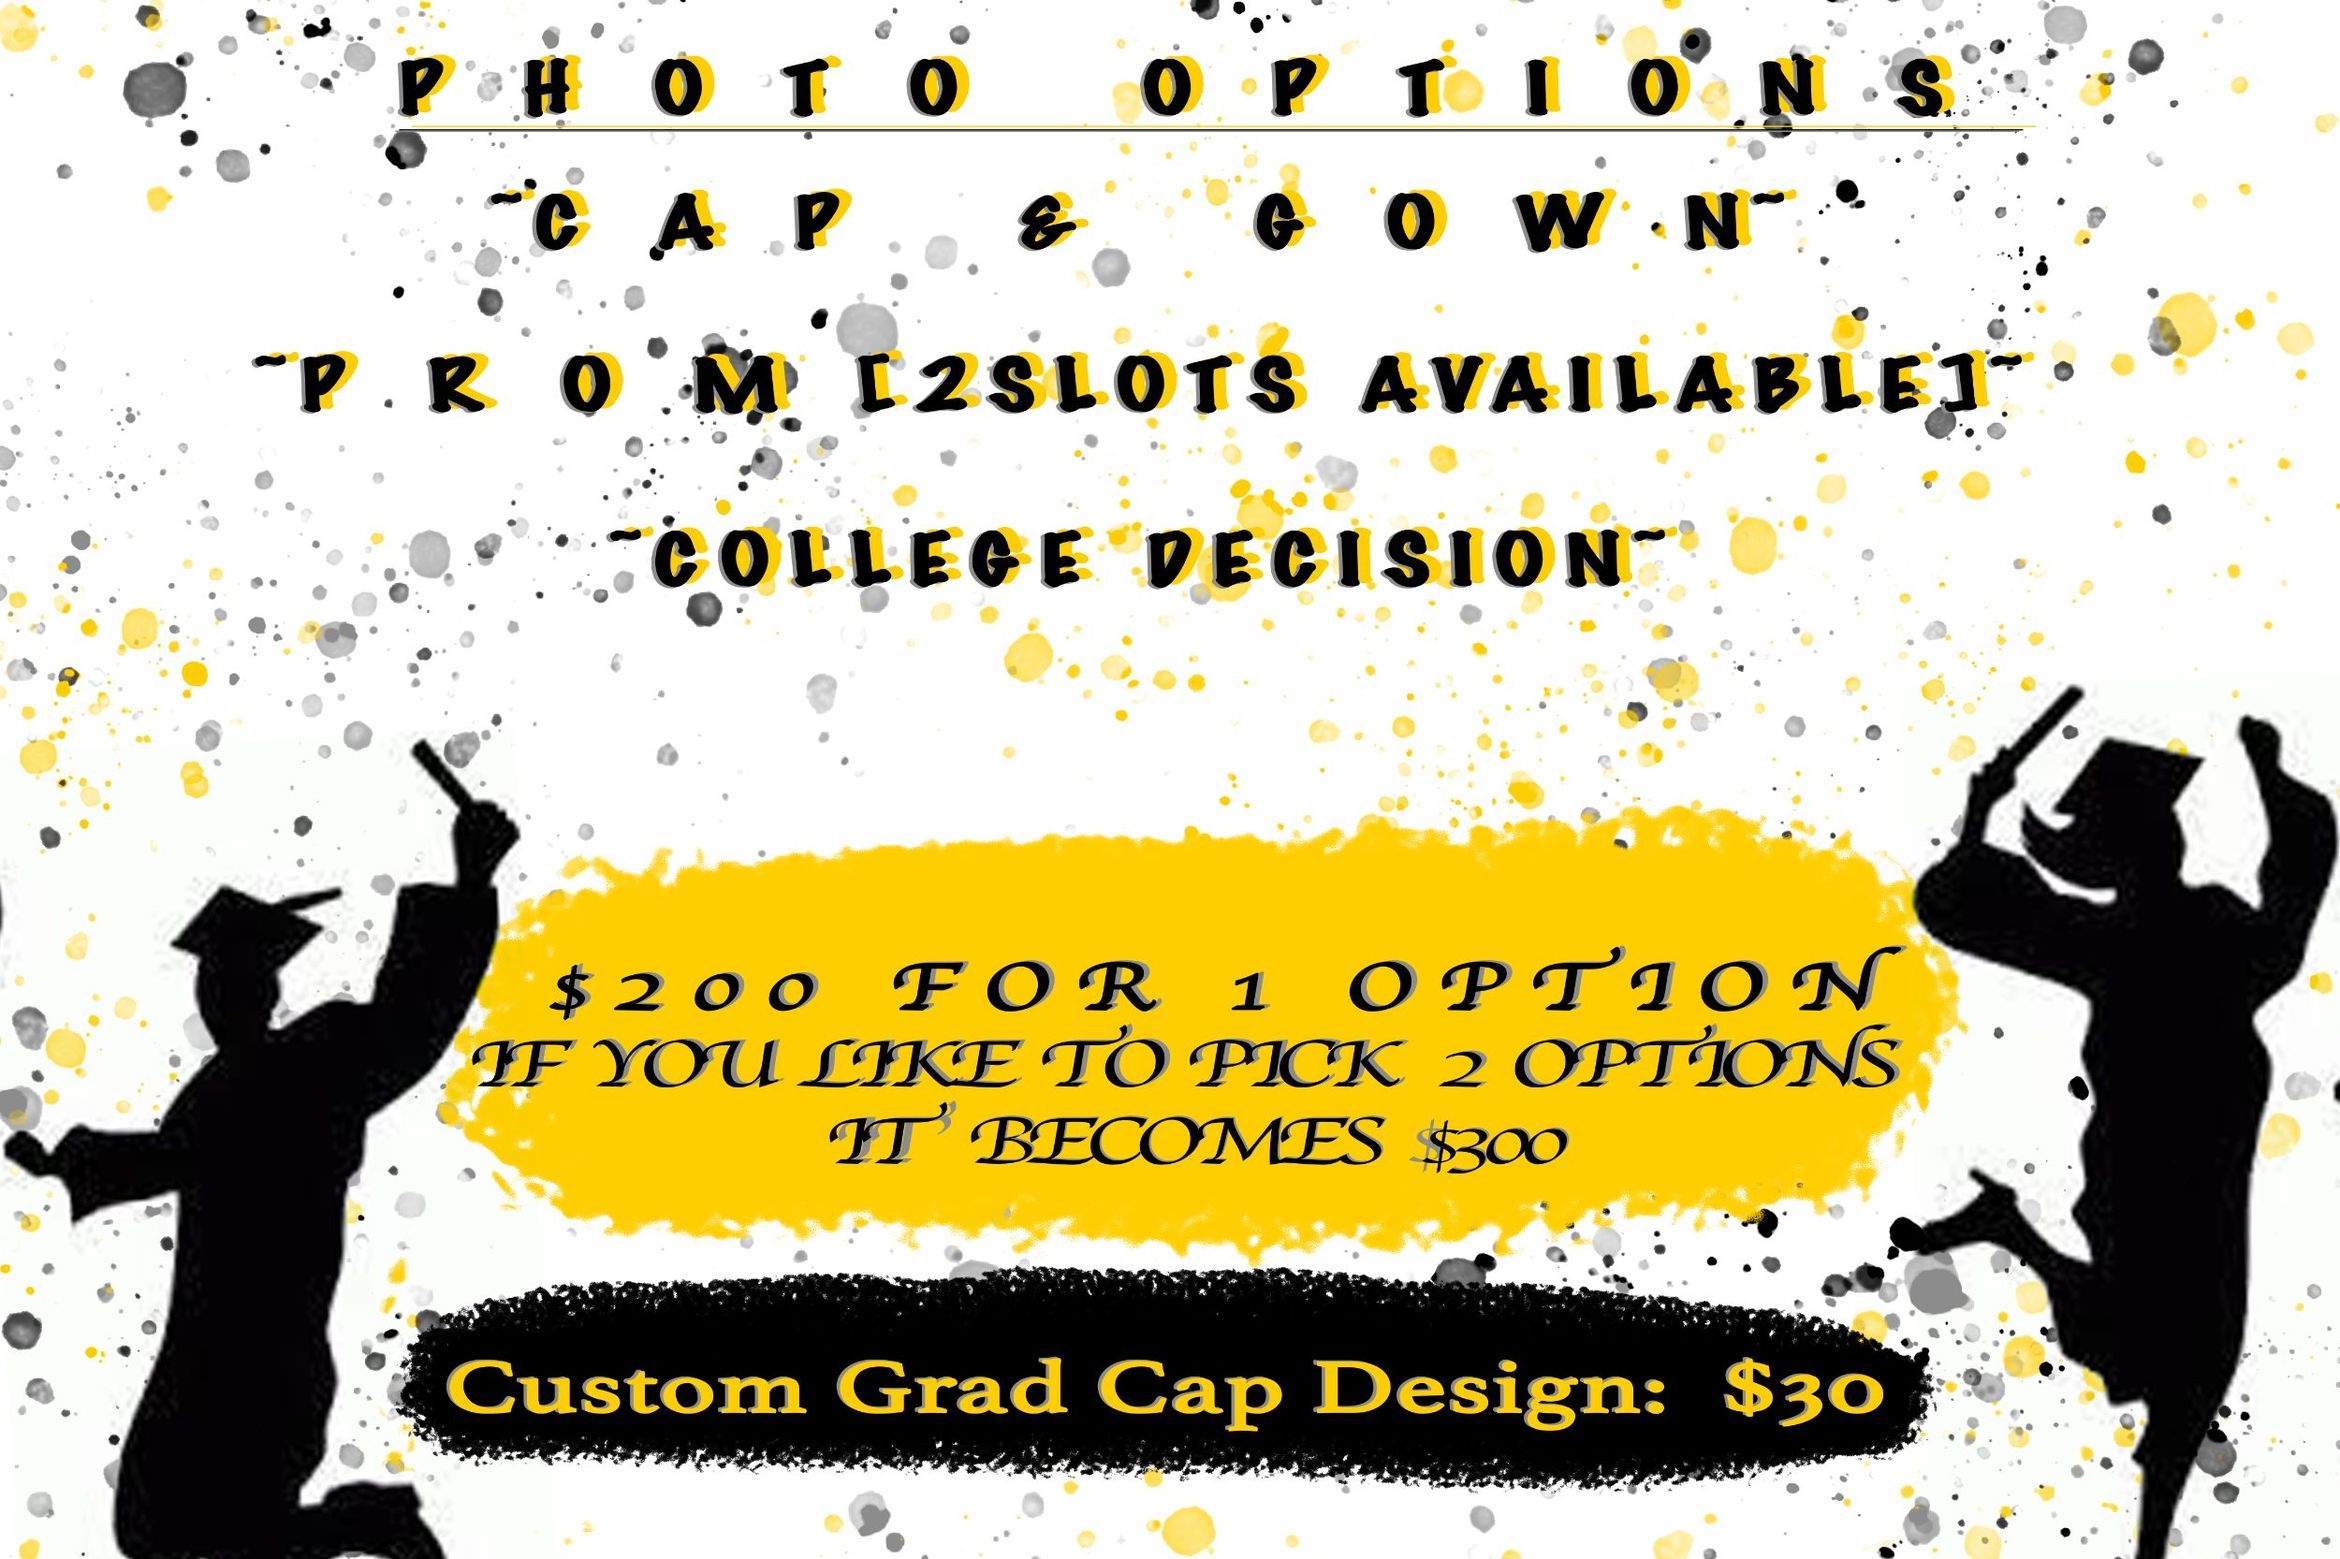 HS Graduation, College Choice, and/or Prom Shoot portfolio